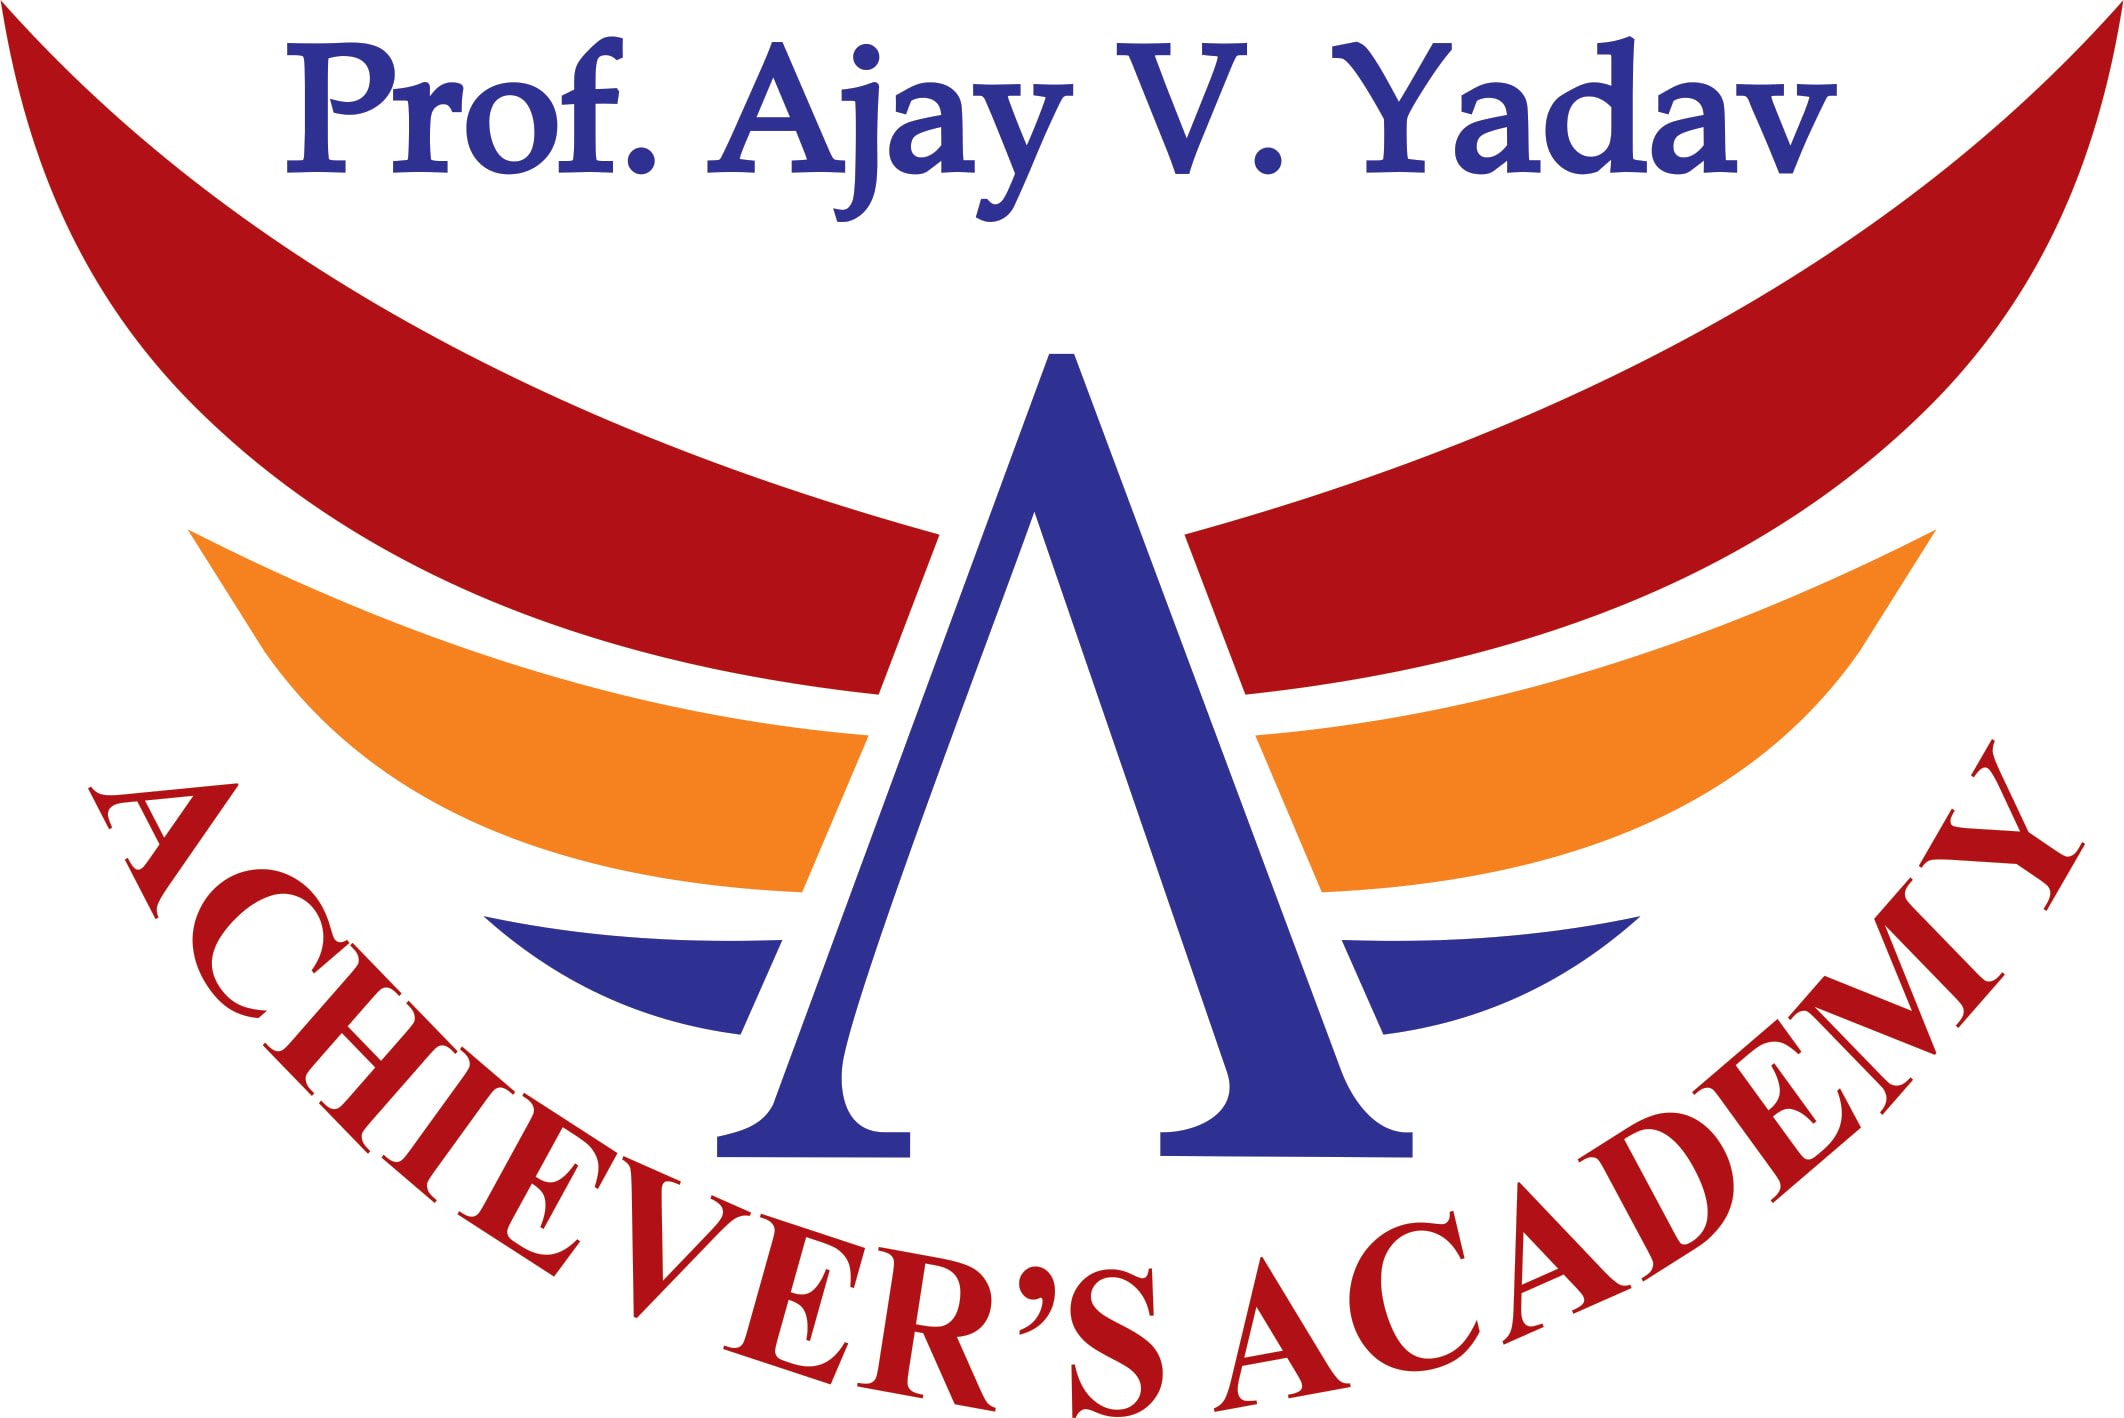 Achiever's Academy